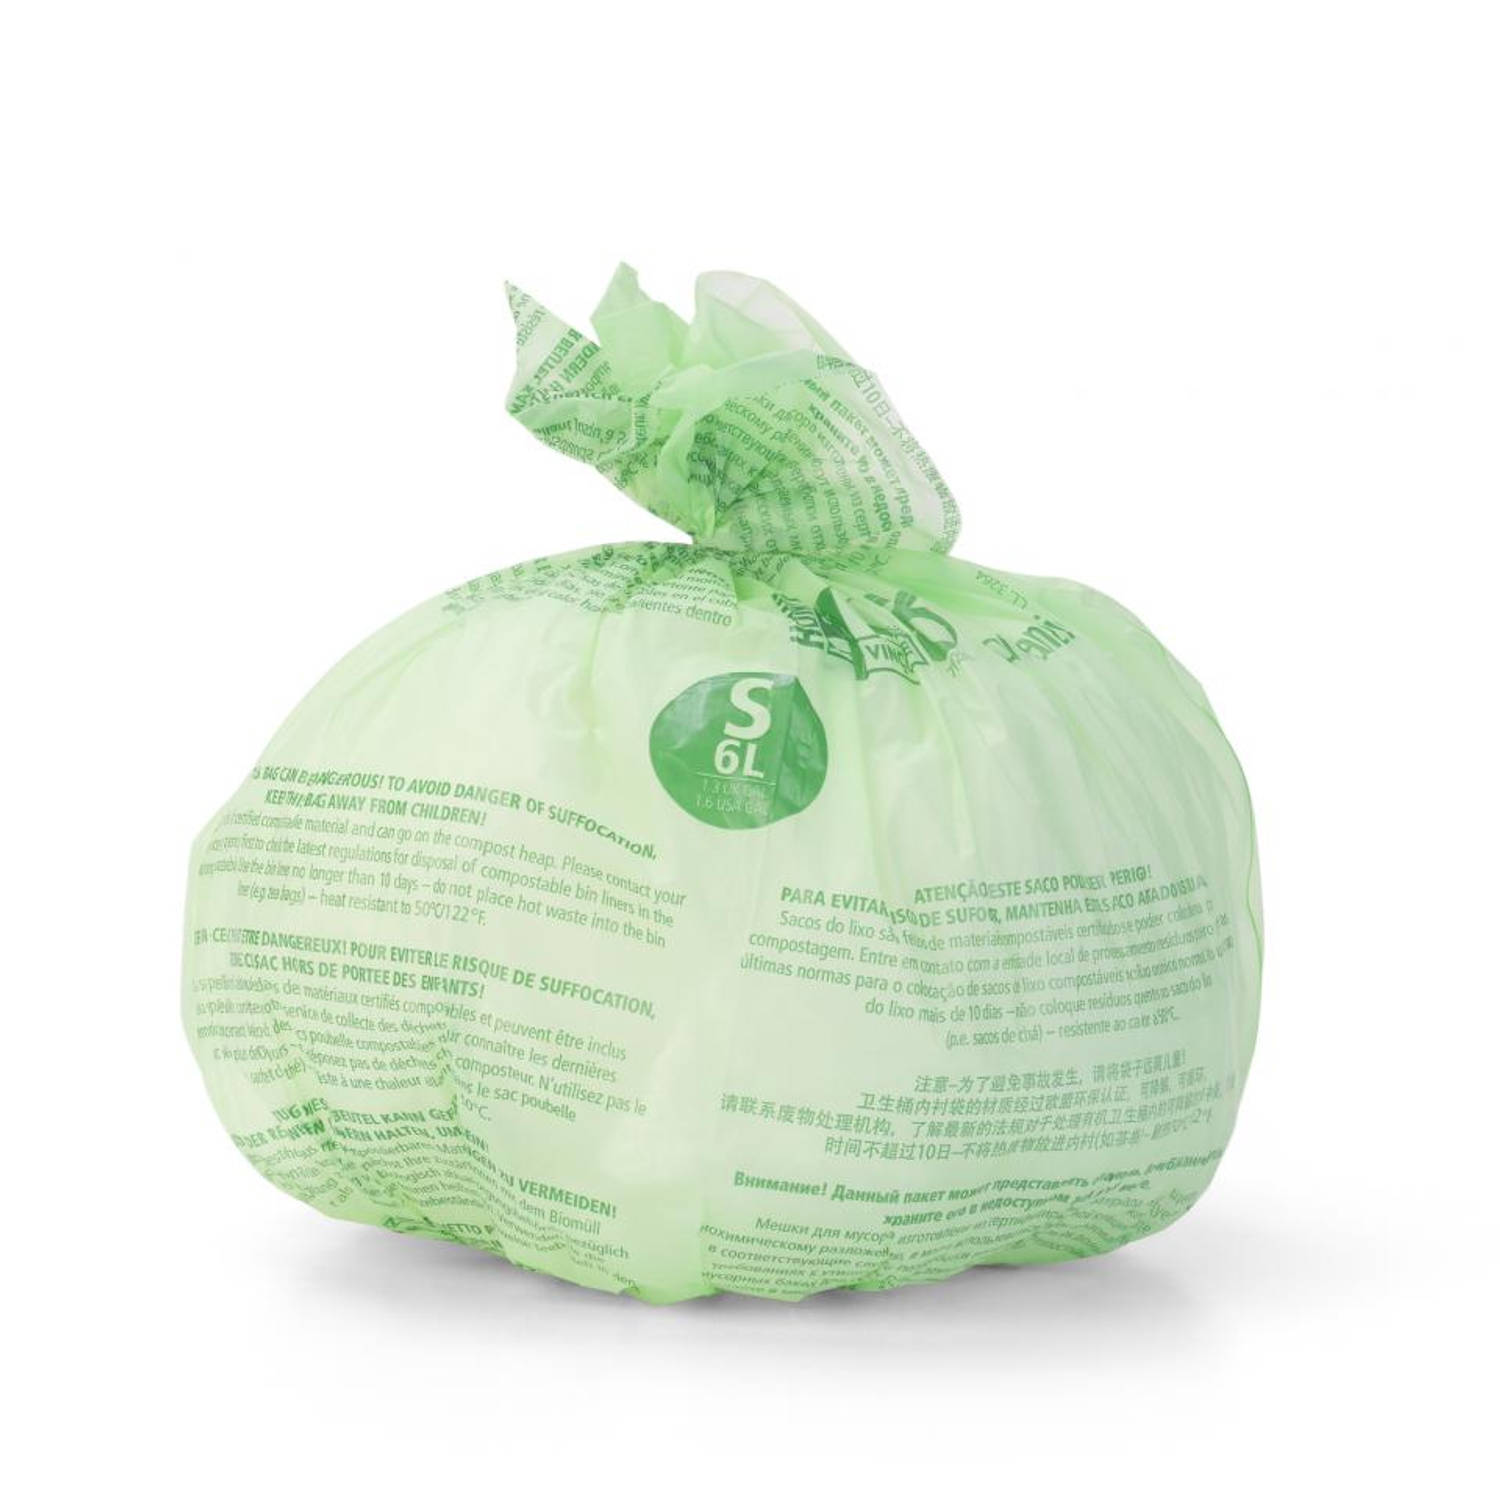 Eik Oranje Higgins Brabantia PerfectFit composteerbare afvalzak code S, 6 liter, 10 stuks/rol  - Green | Blokker